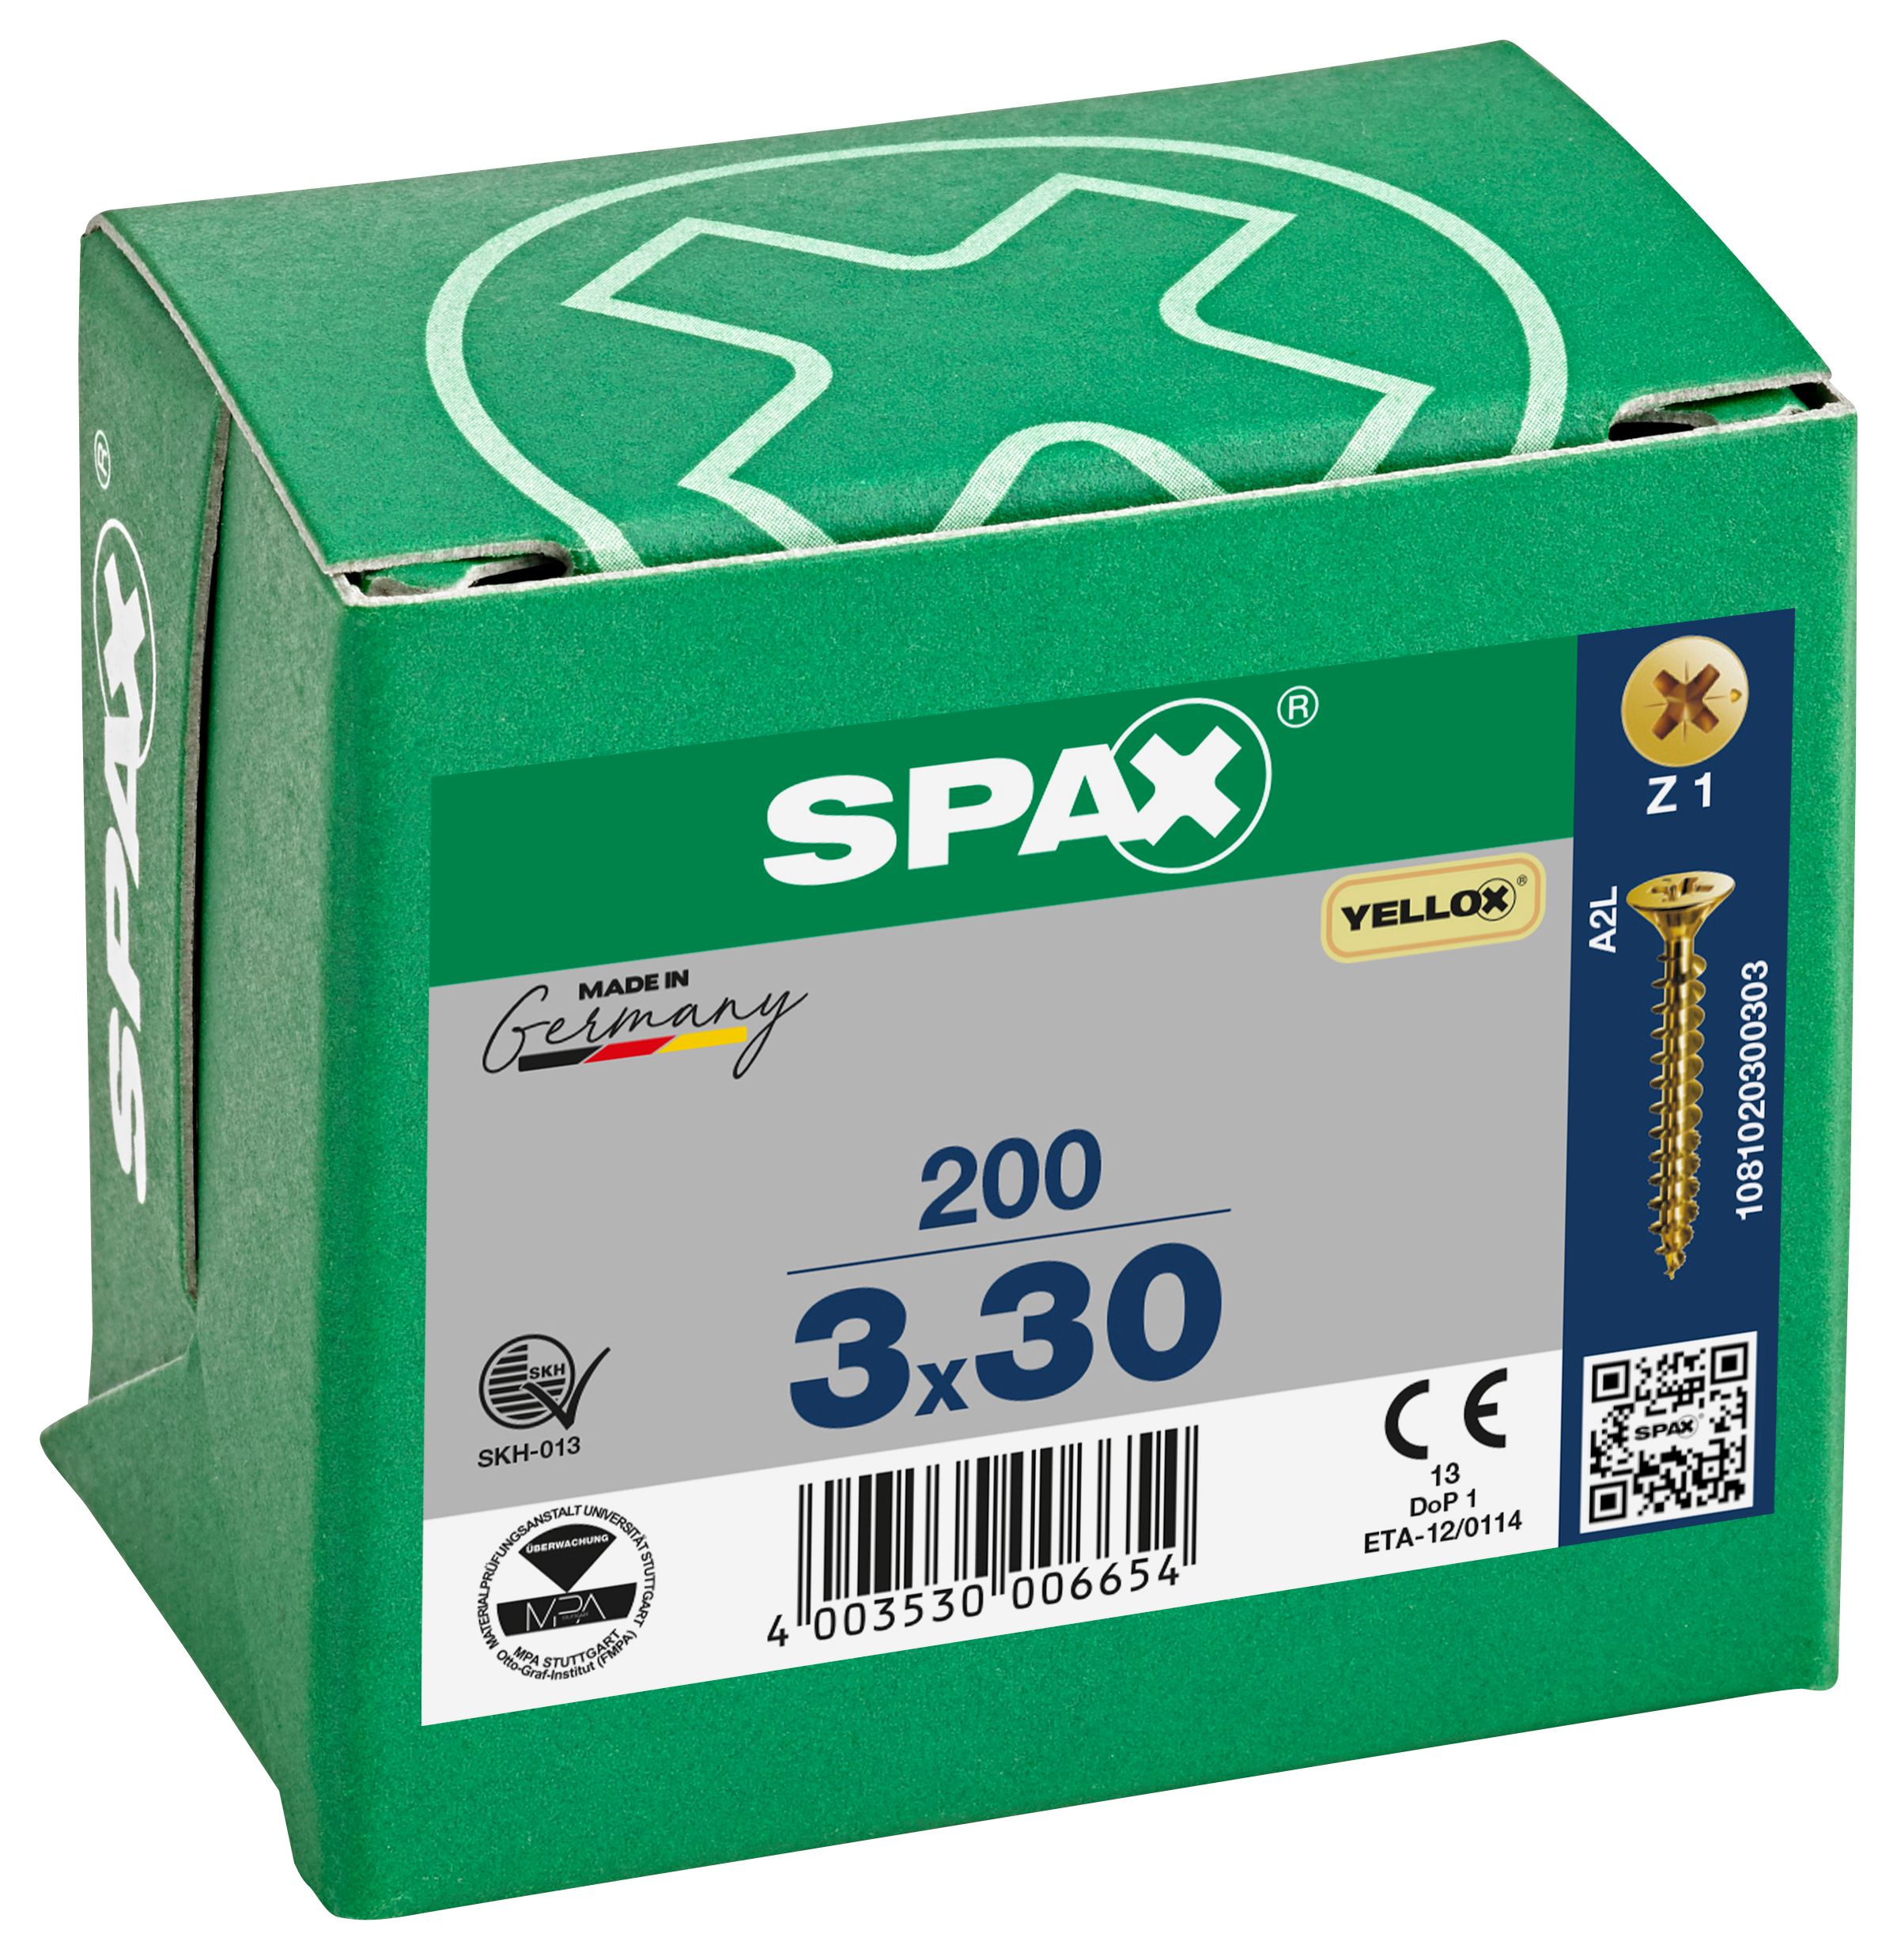 Spax Pz Countersunk Yellox Screws - 3x30mm Pack Of 200